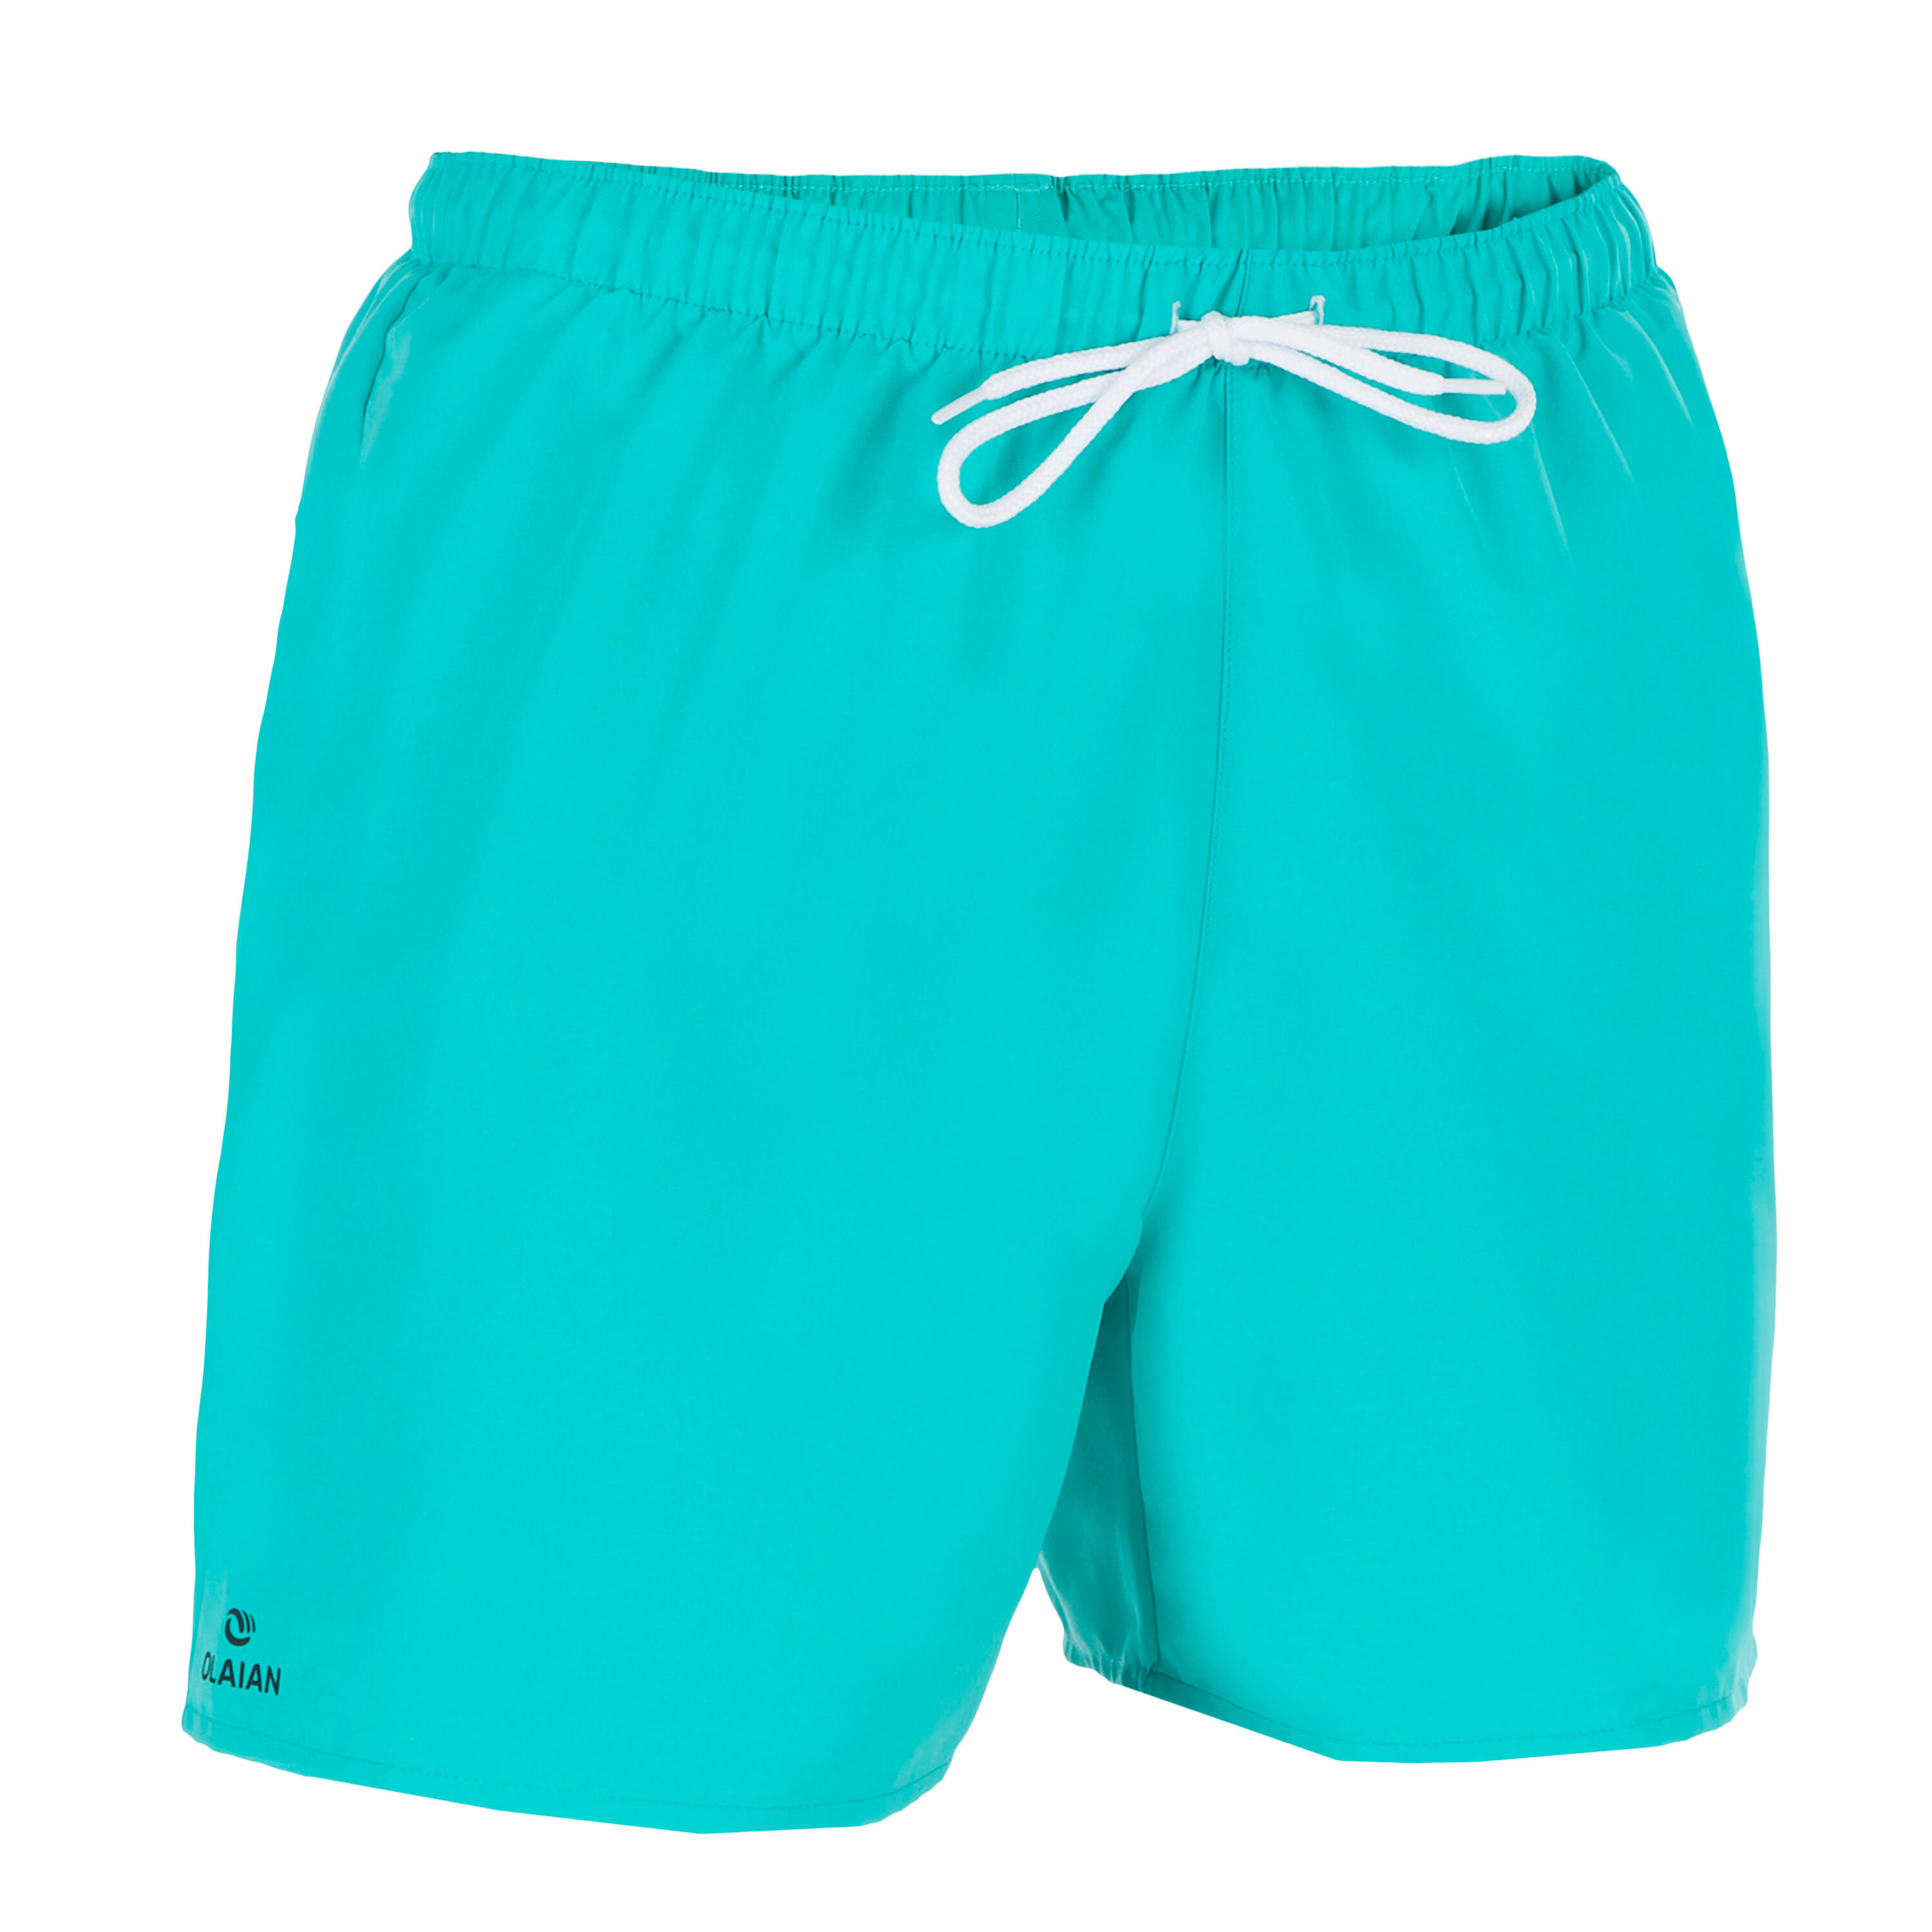 olaian shorts